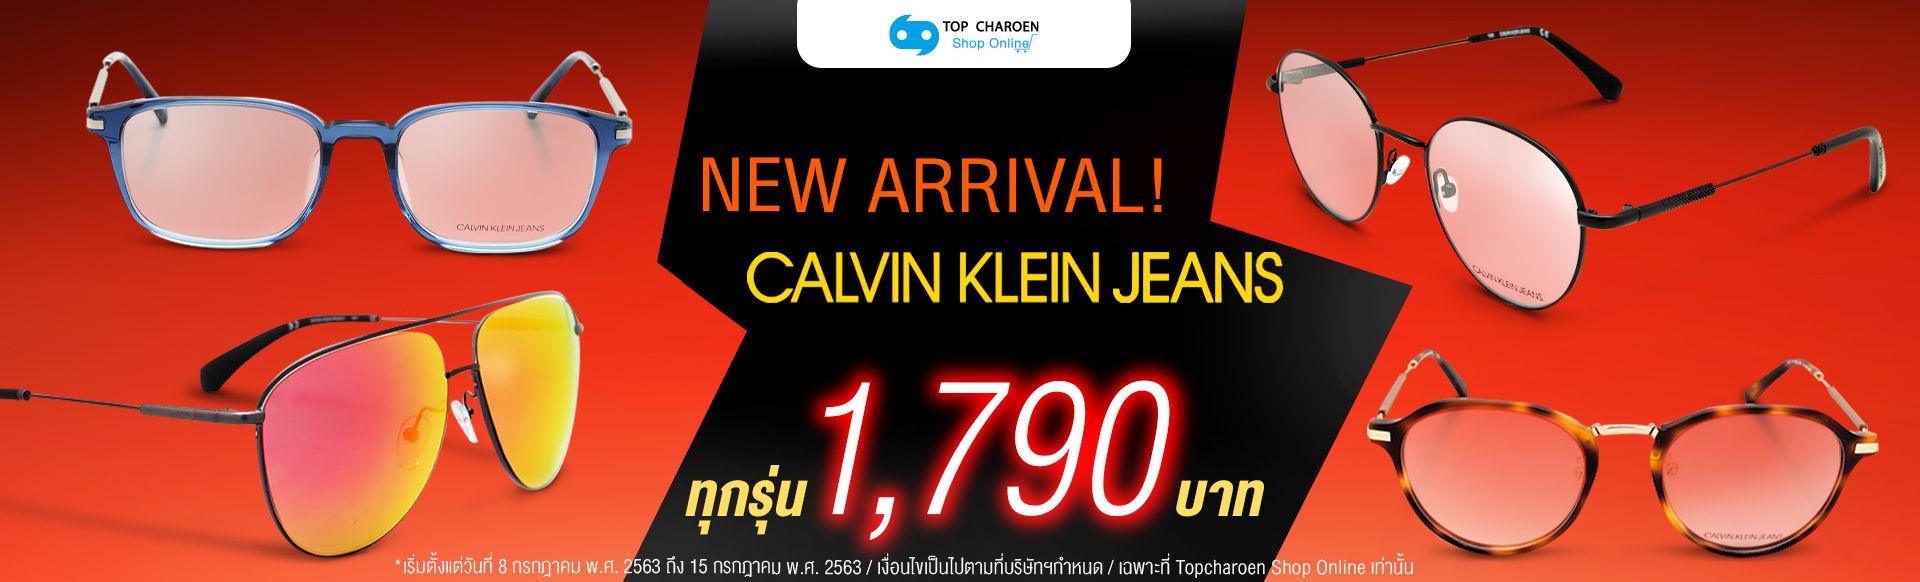 News Arrival! Calvin Klein Jeans ทุกรุ่น 1,790 บาท